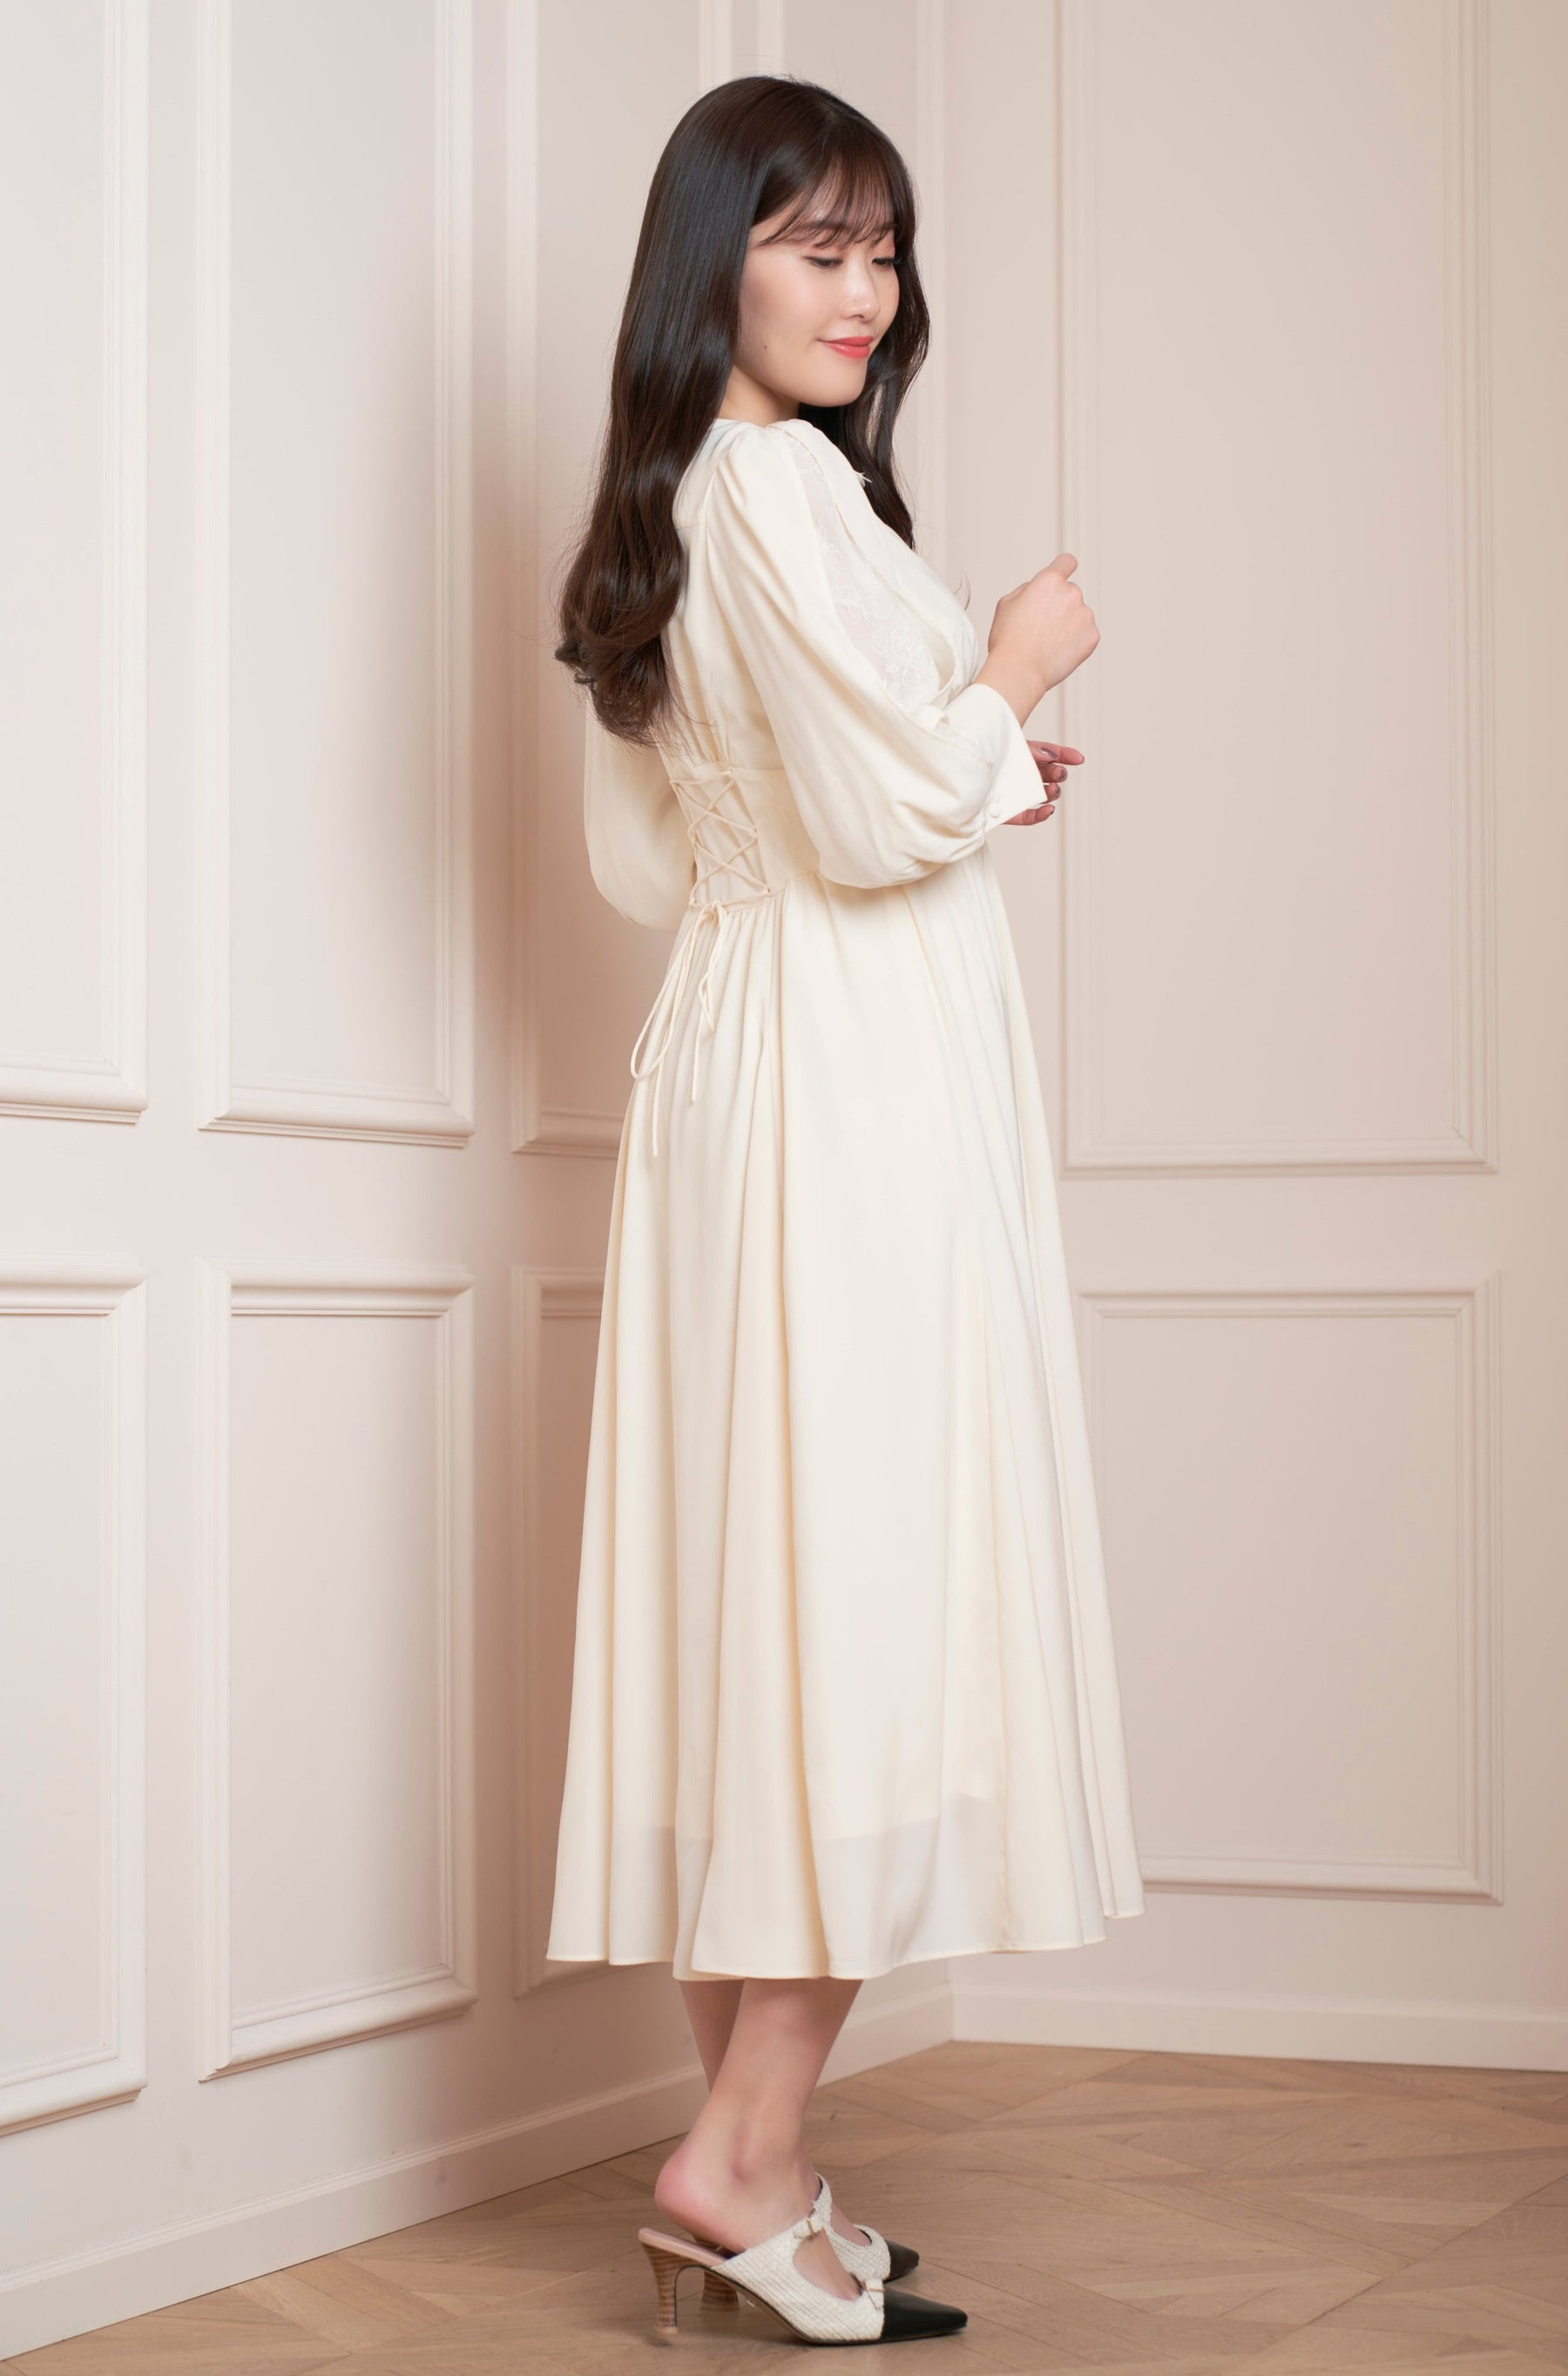 herlipto Lace Sleeve Crepe Long Dress67袖丈 - pacdiecast.com